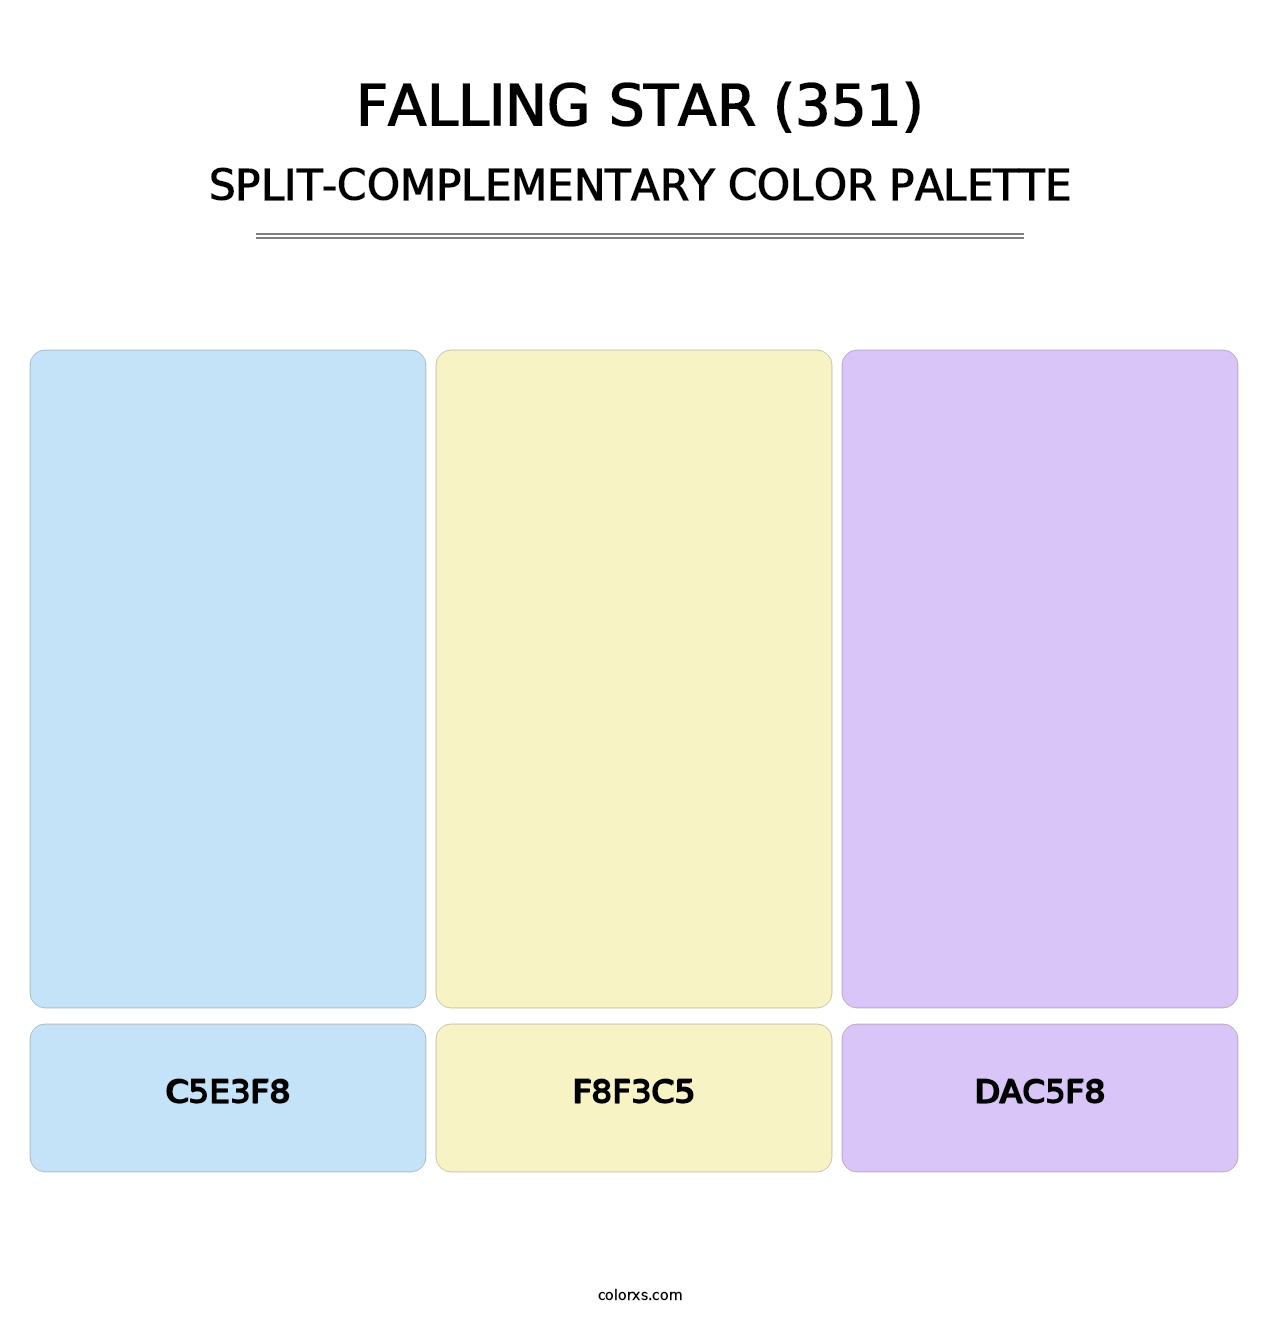 Falling Star (351) - Split-Complementary Color Palette